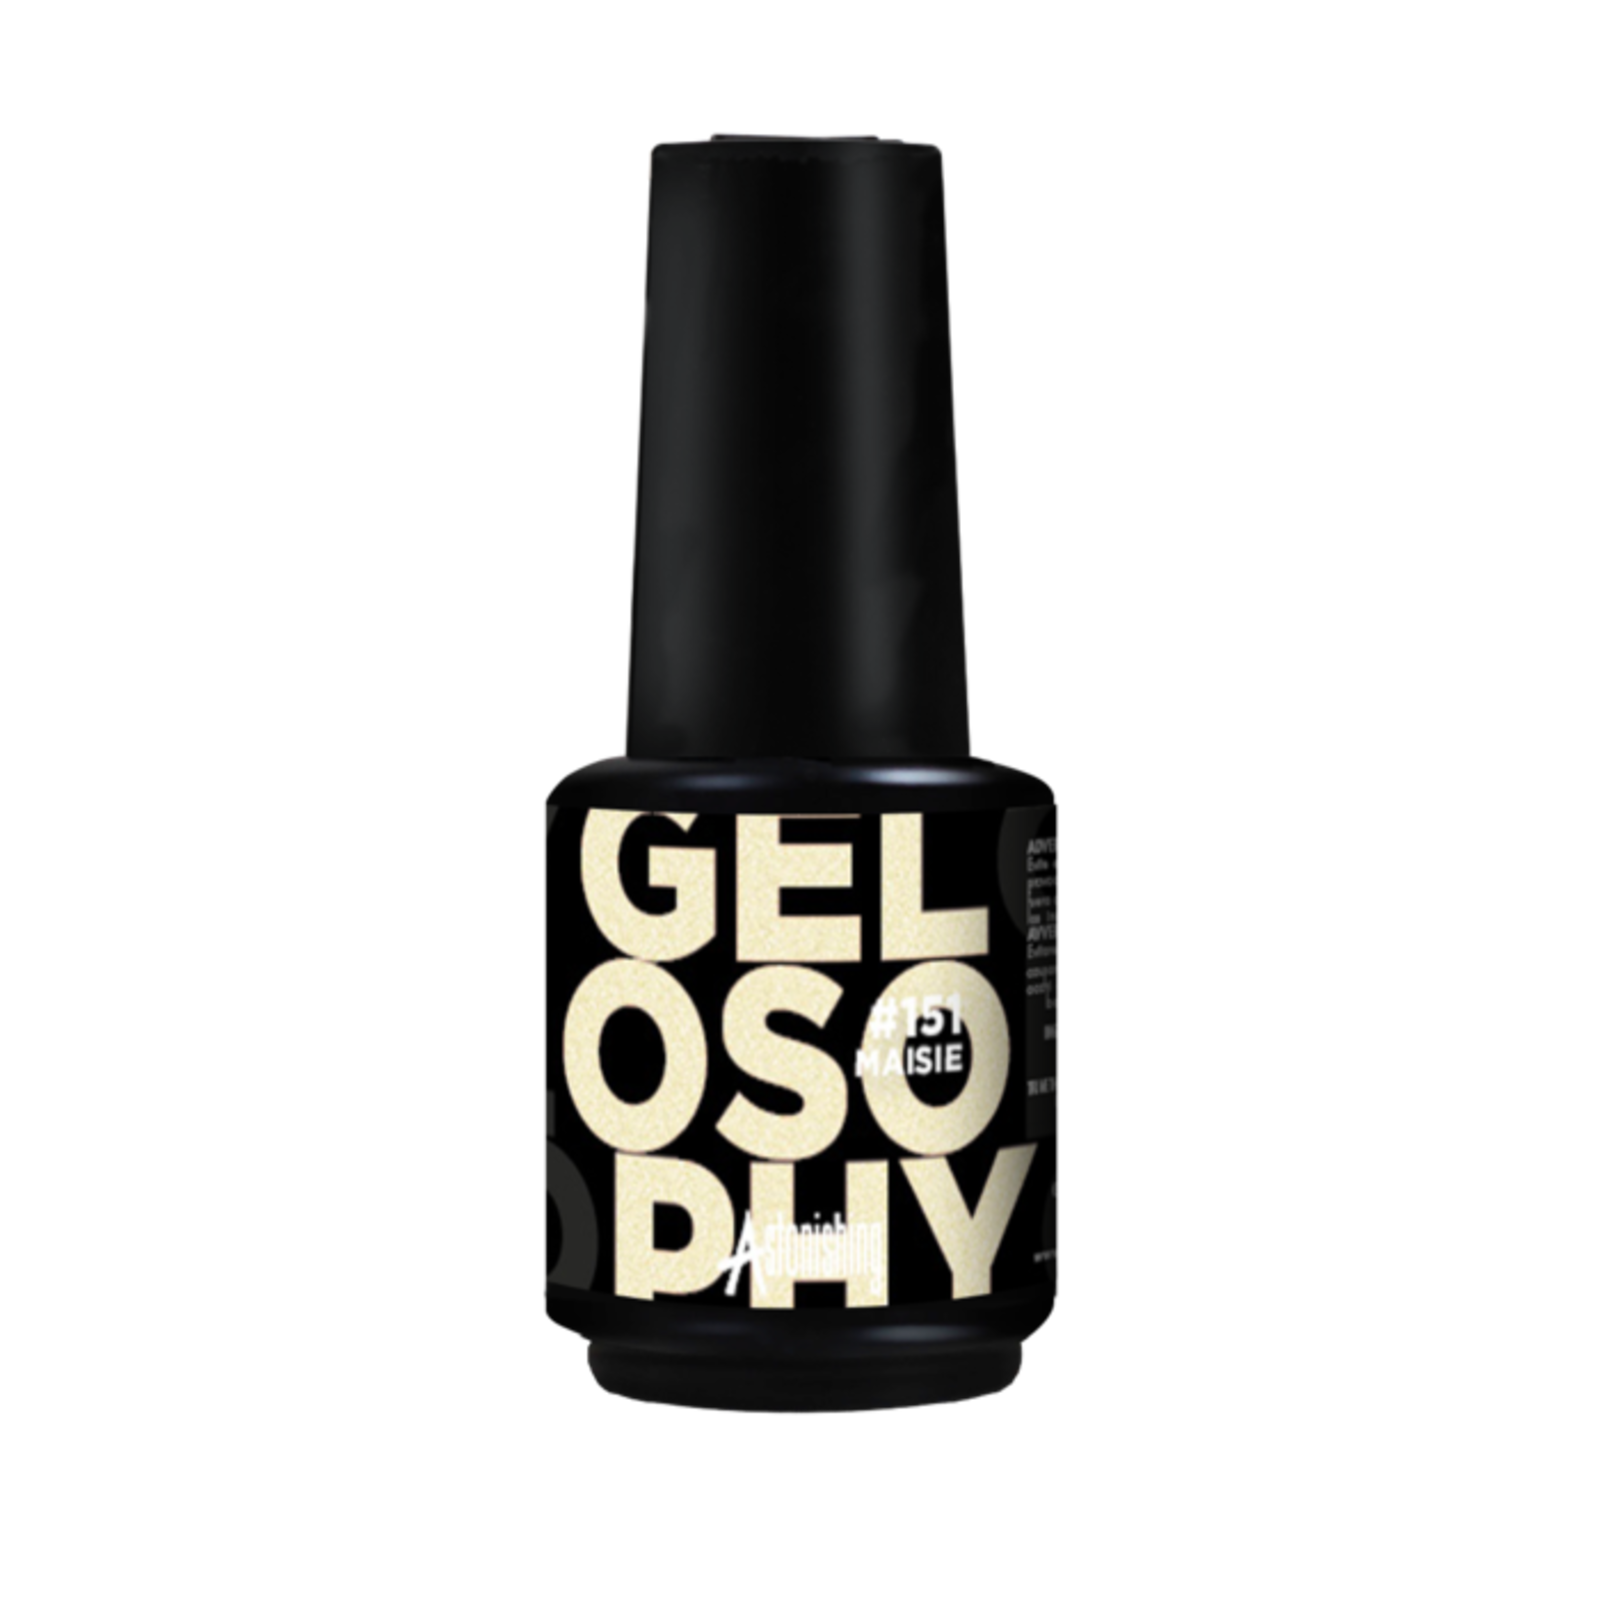 Astonishing Gelosophy #150 Sereia 15 ml